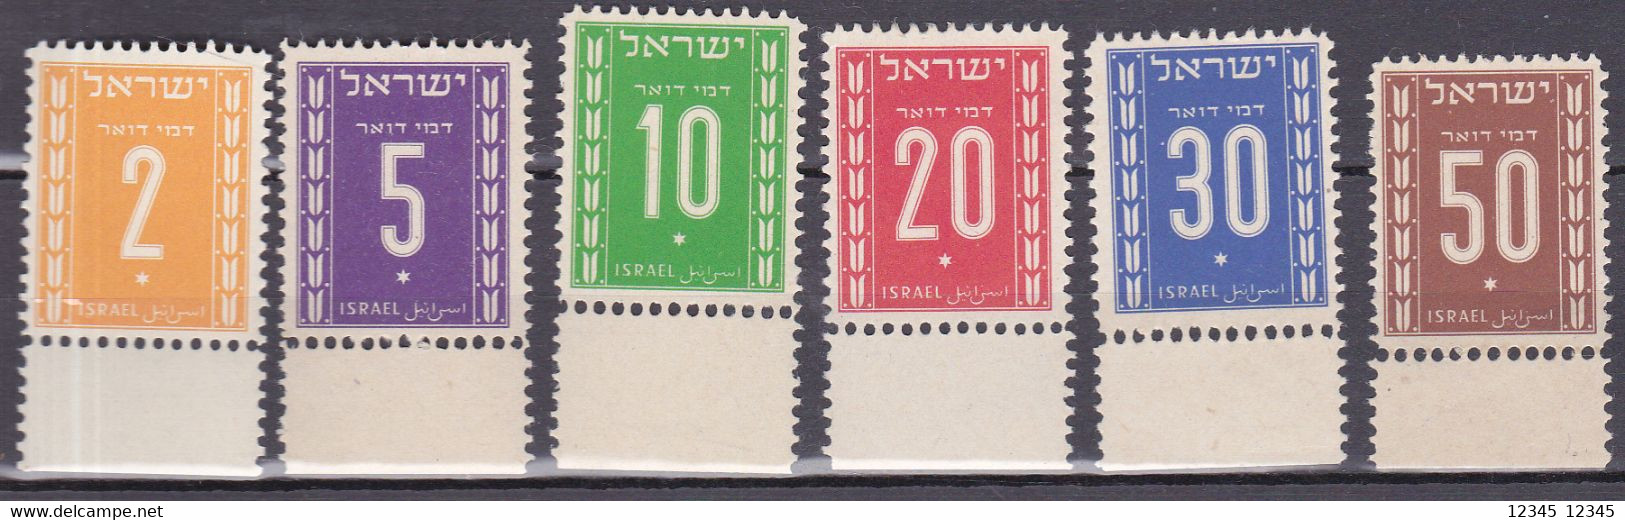 Israël 1949, Postfris MNH, Port (20=MH) - Strafport